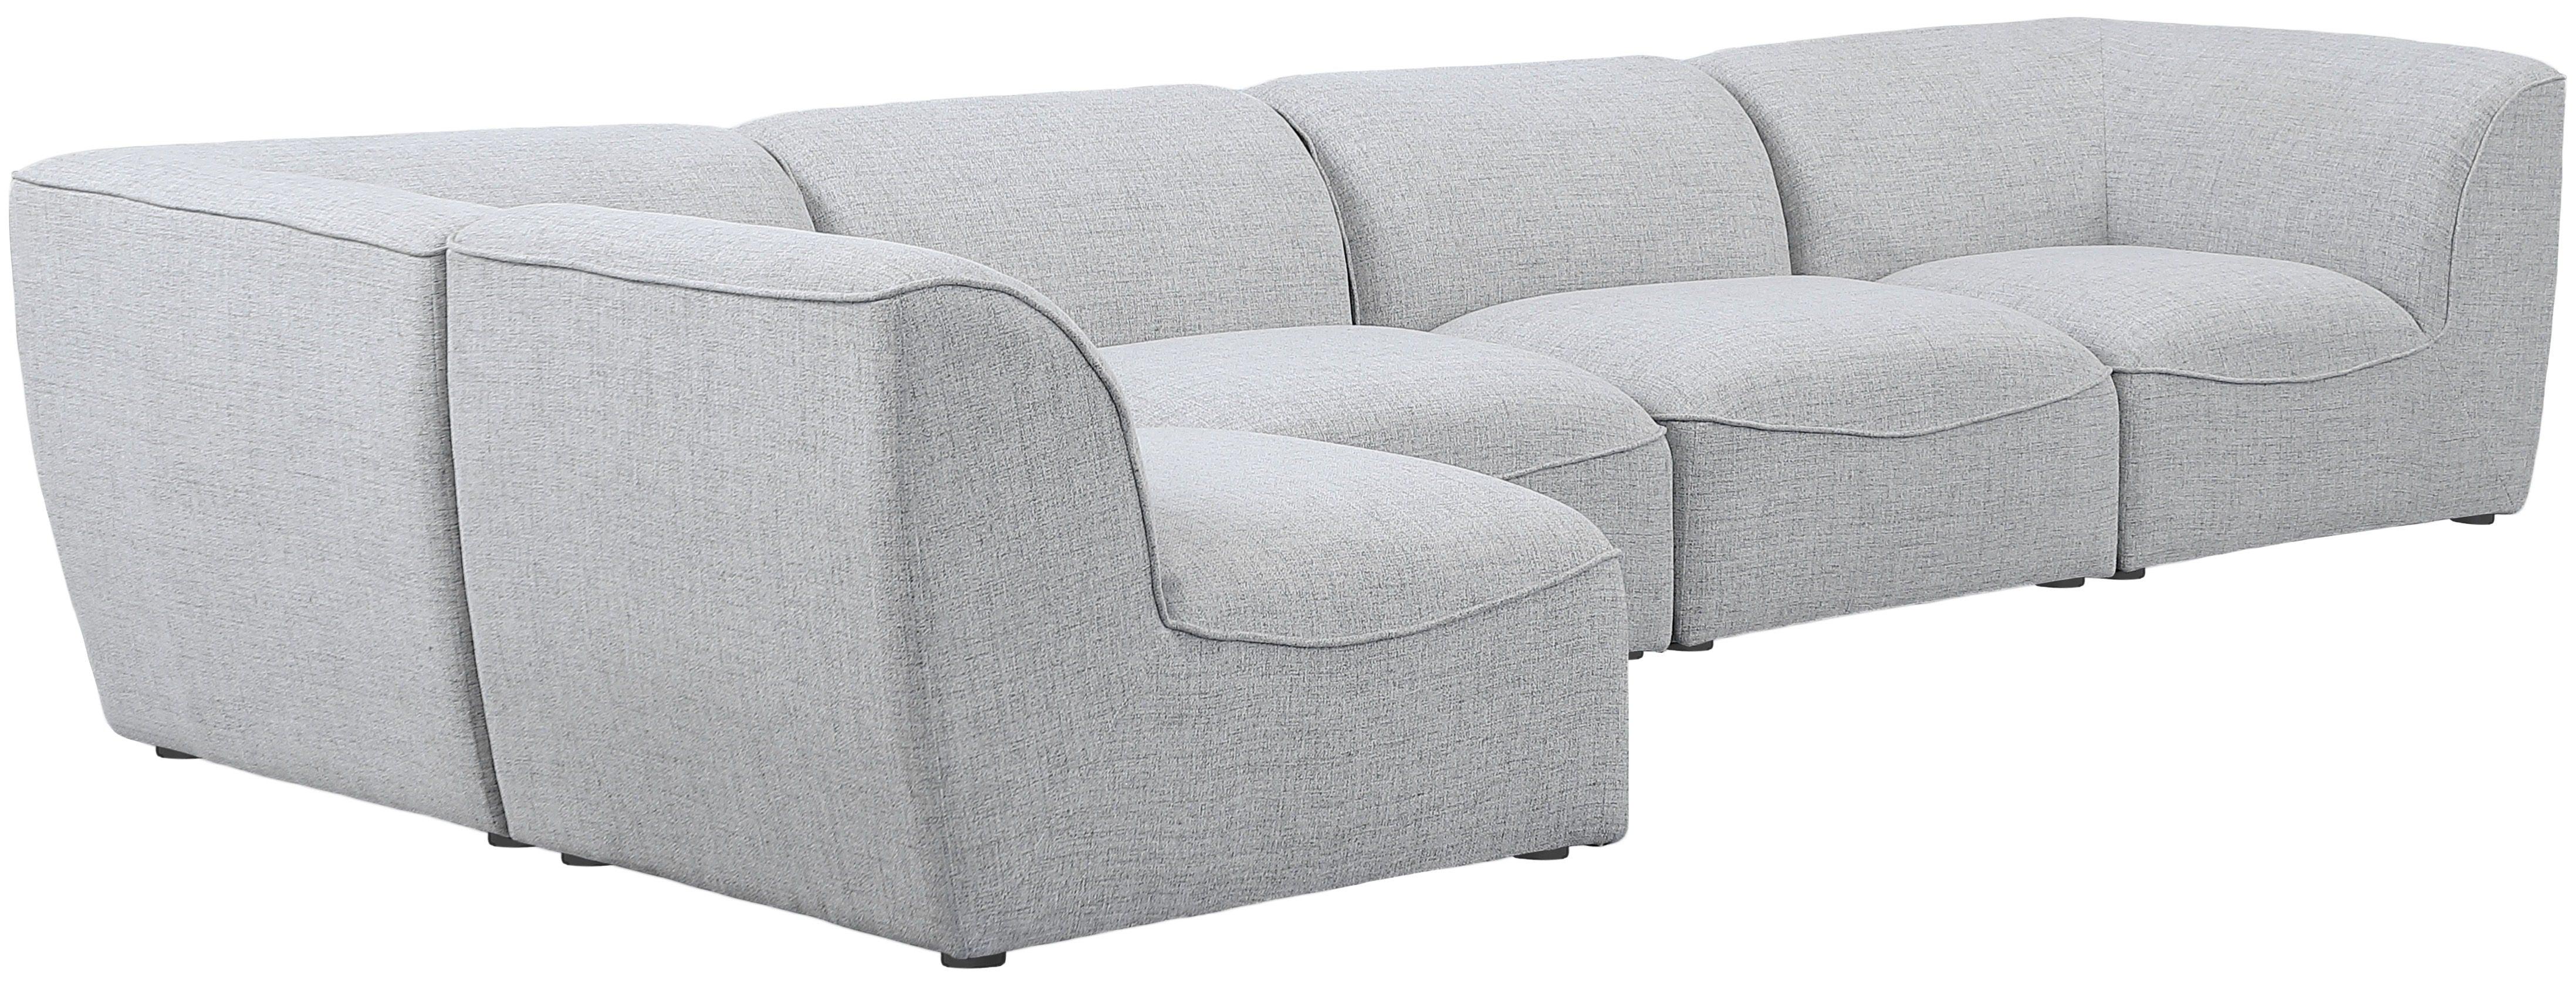 Meridian Furniture - Miramar - Modular Sectional 5 Piece - Gray - Modern & Contemporary - 5th Avenue Furniture